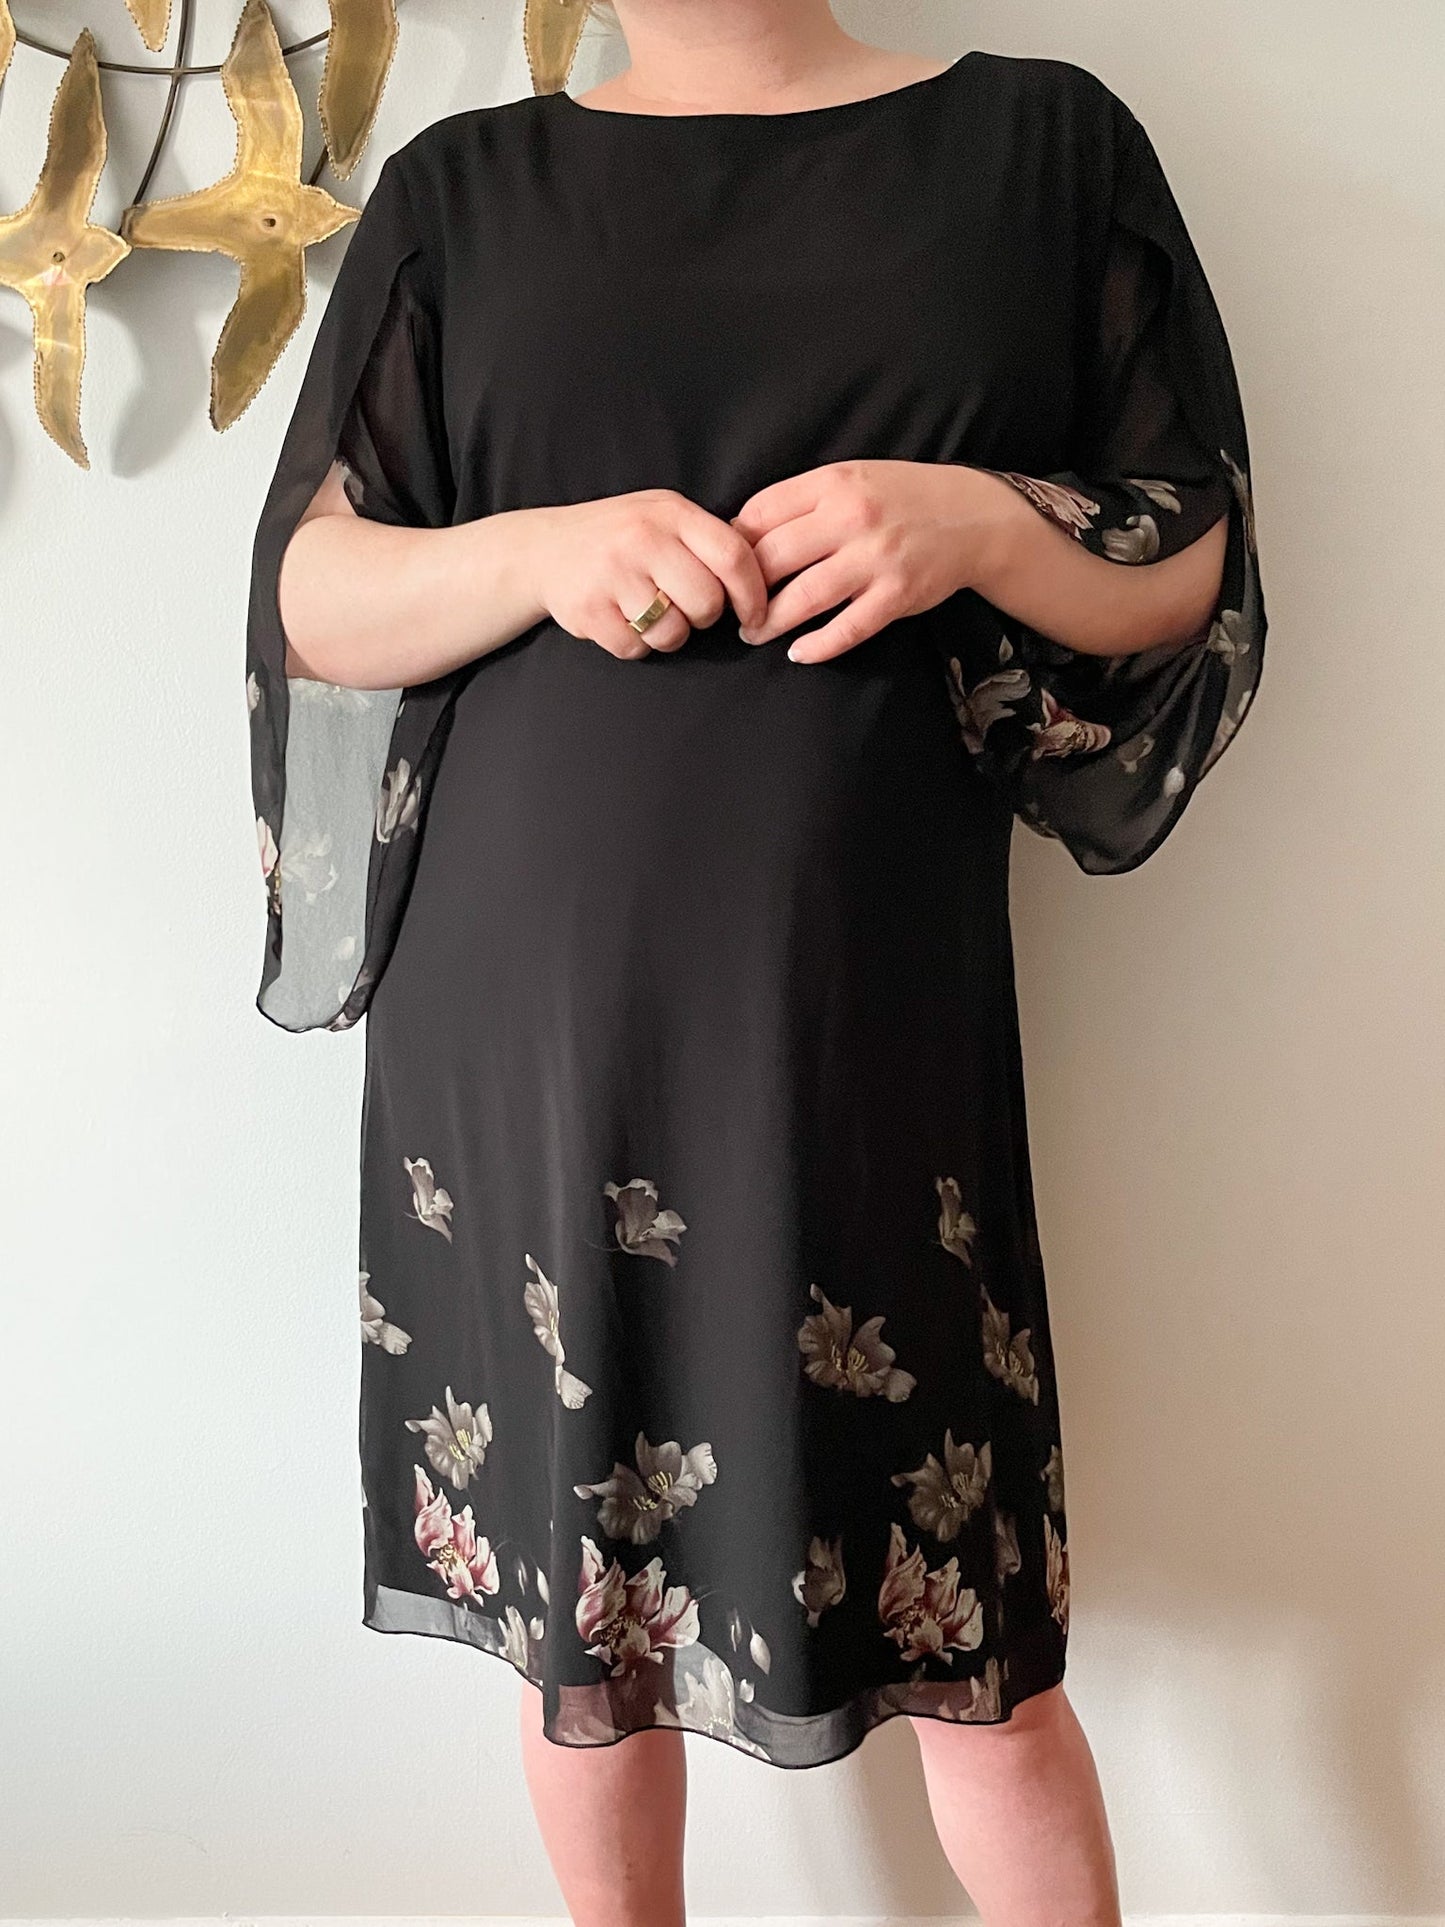 Grace Karin Black Floral Chiffon Slit Sleeve Dress NWT - 2XL